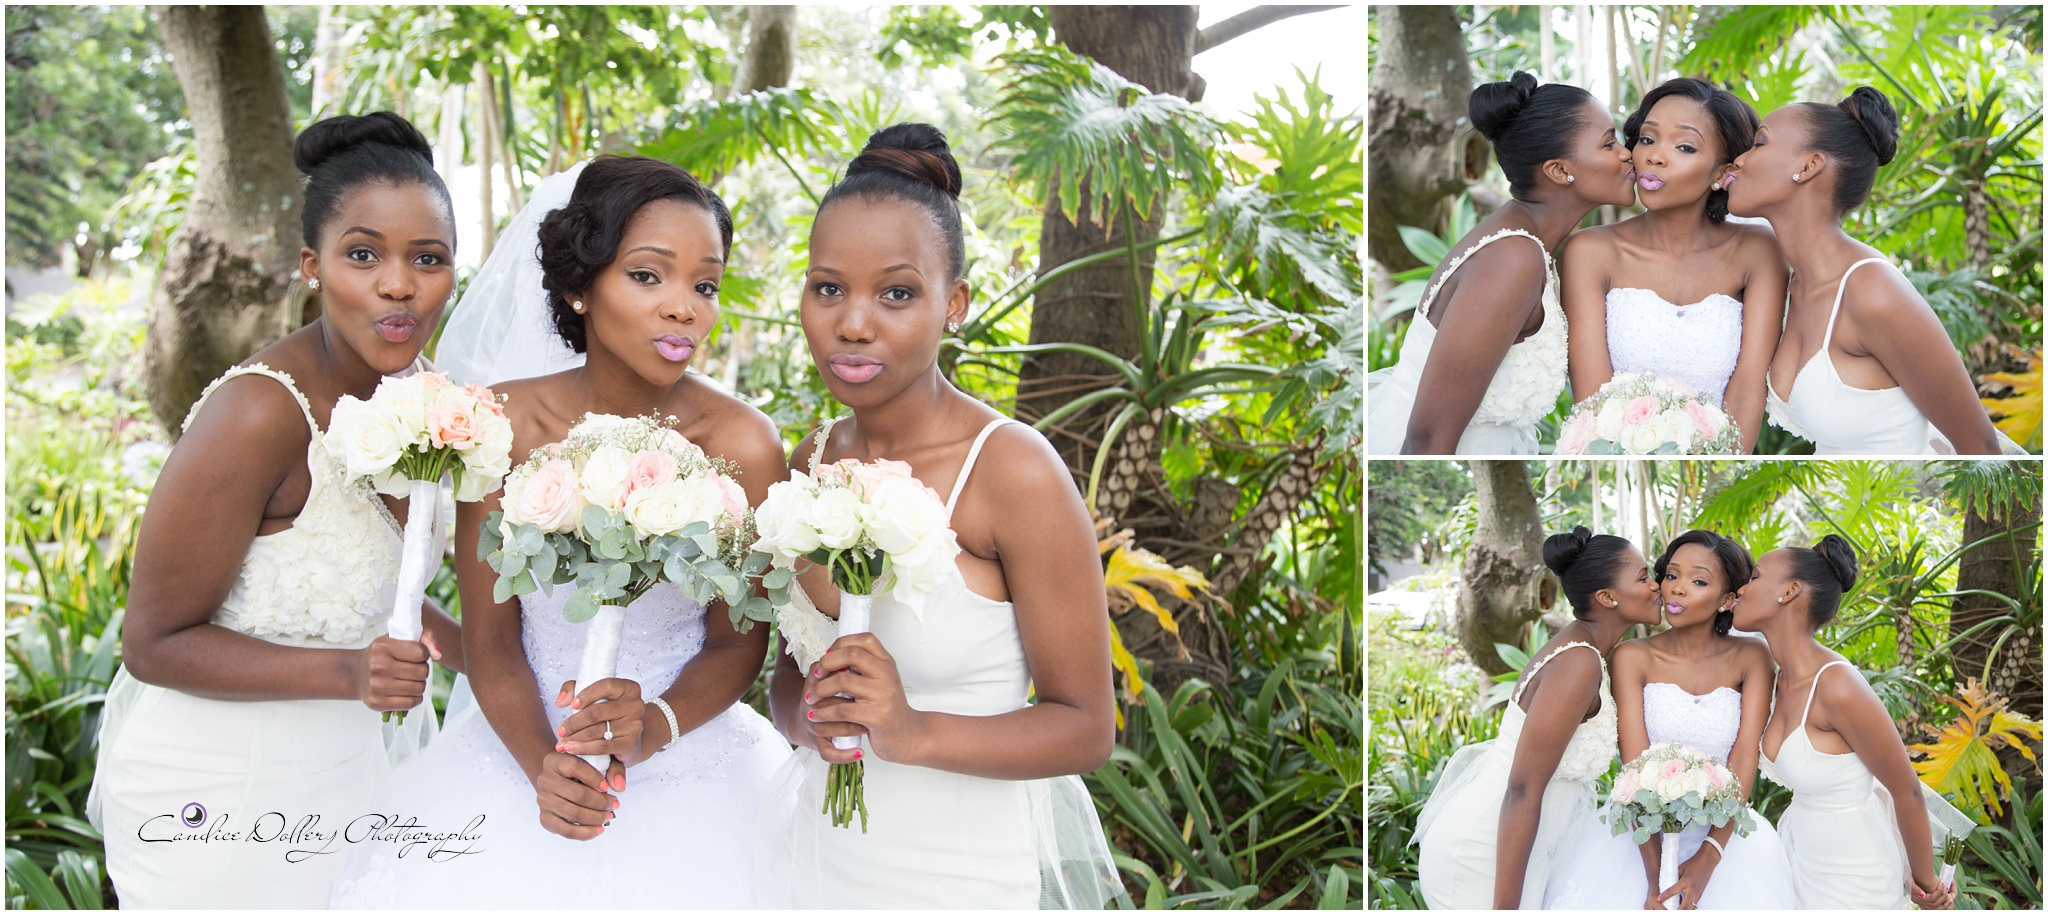 Asanda & Bonga's Wedding - Candice Dollery Photography_8218